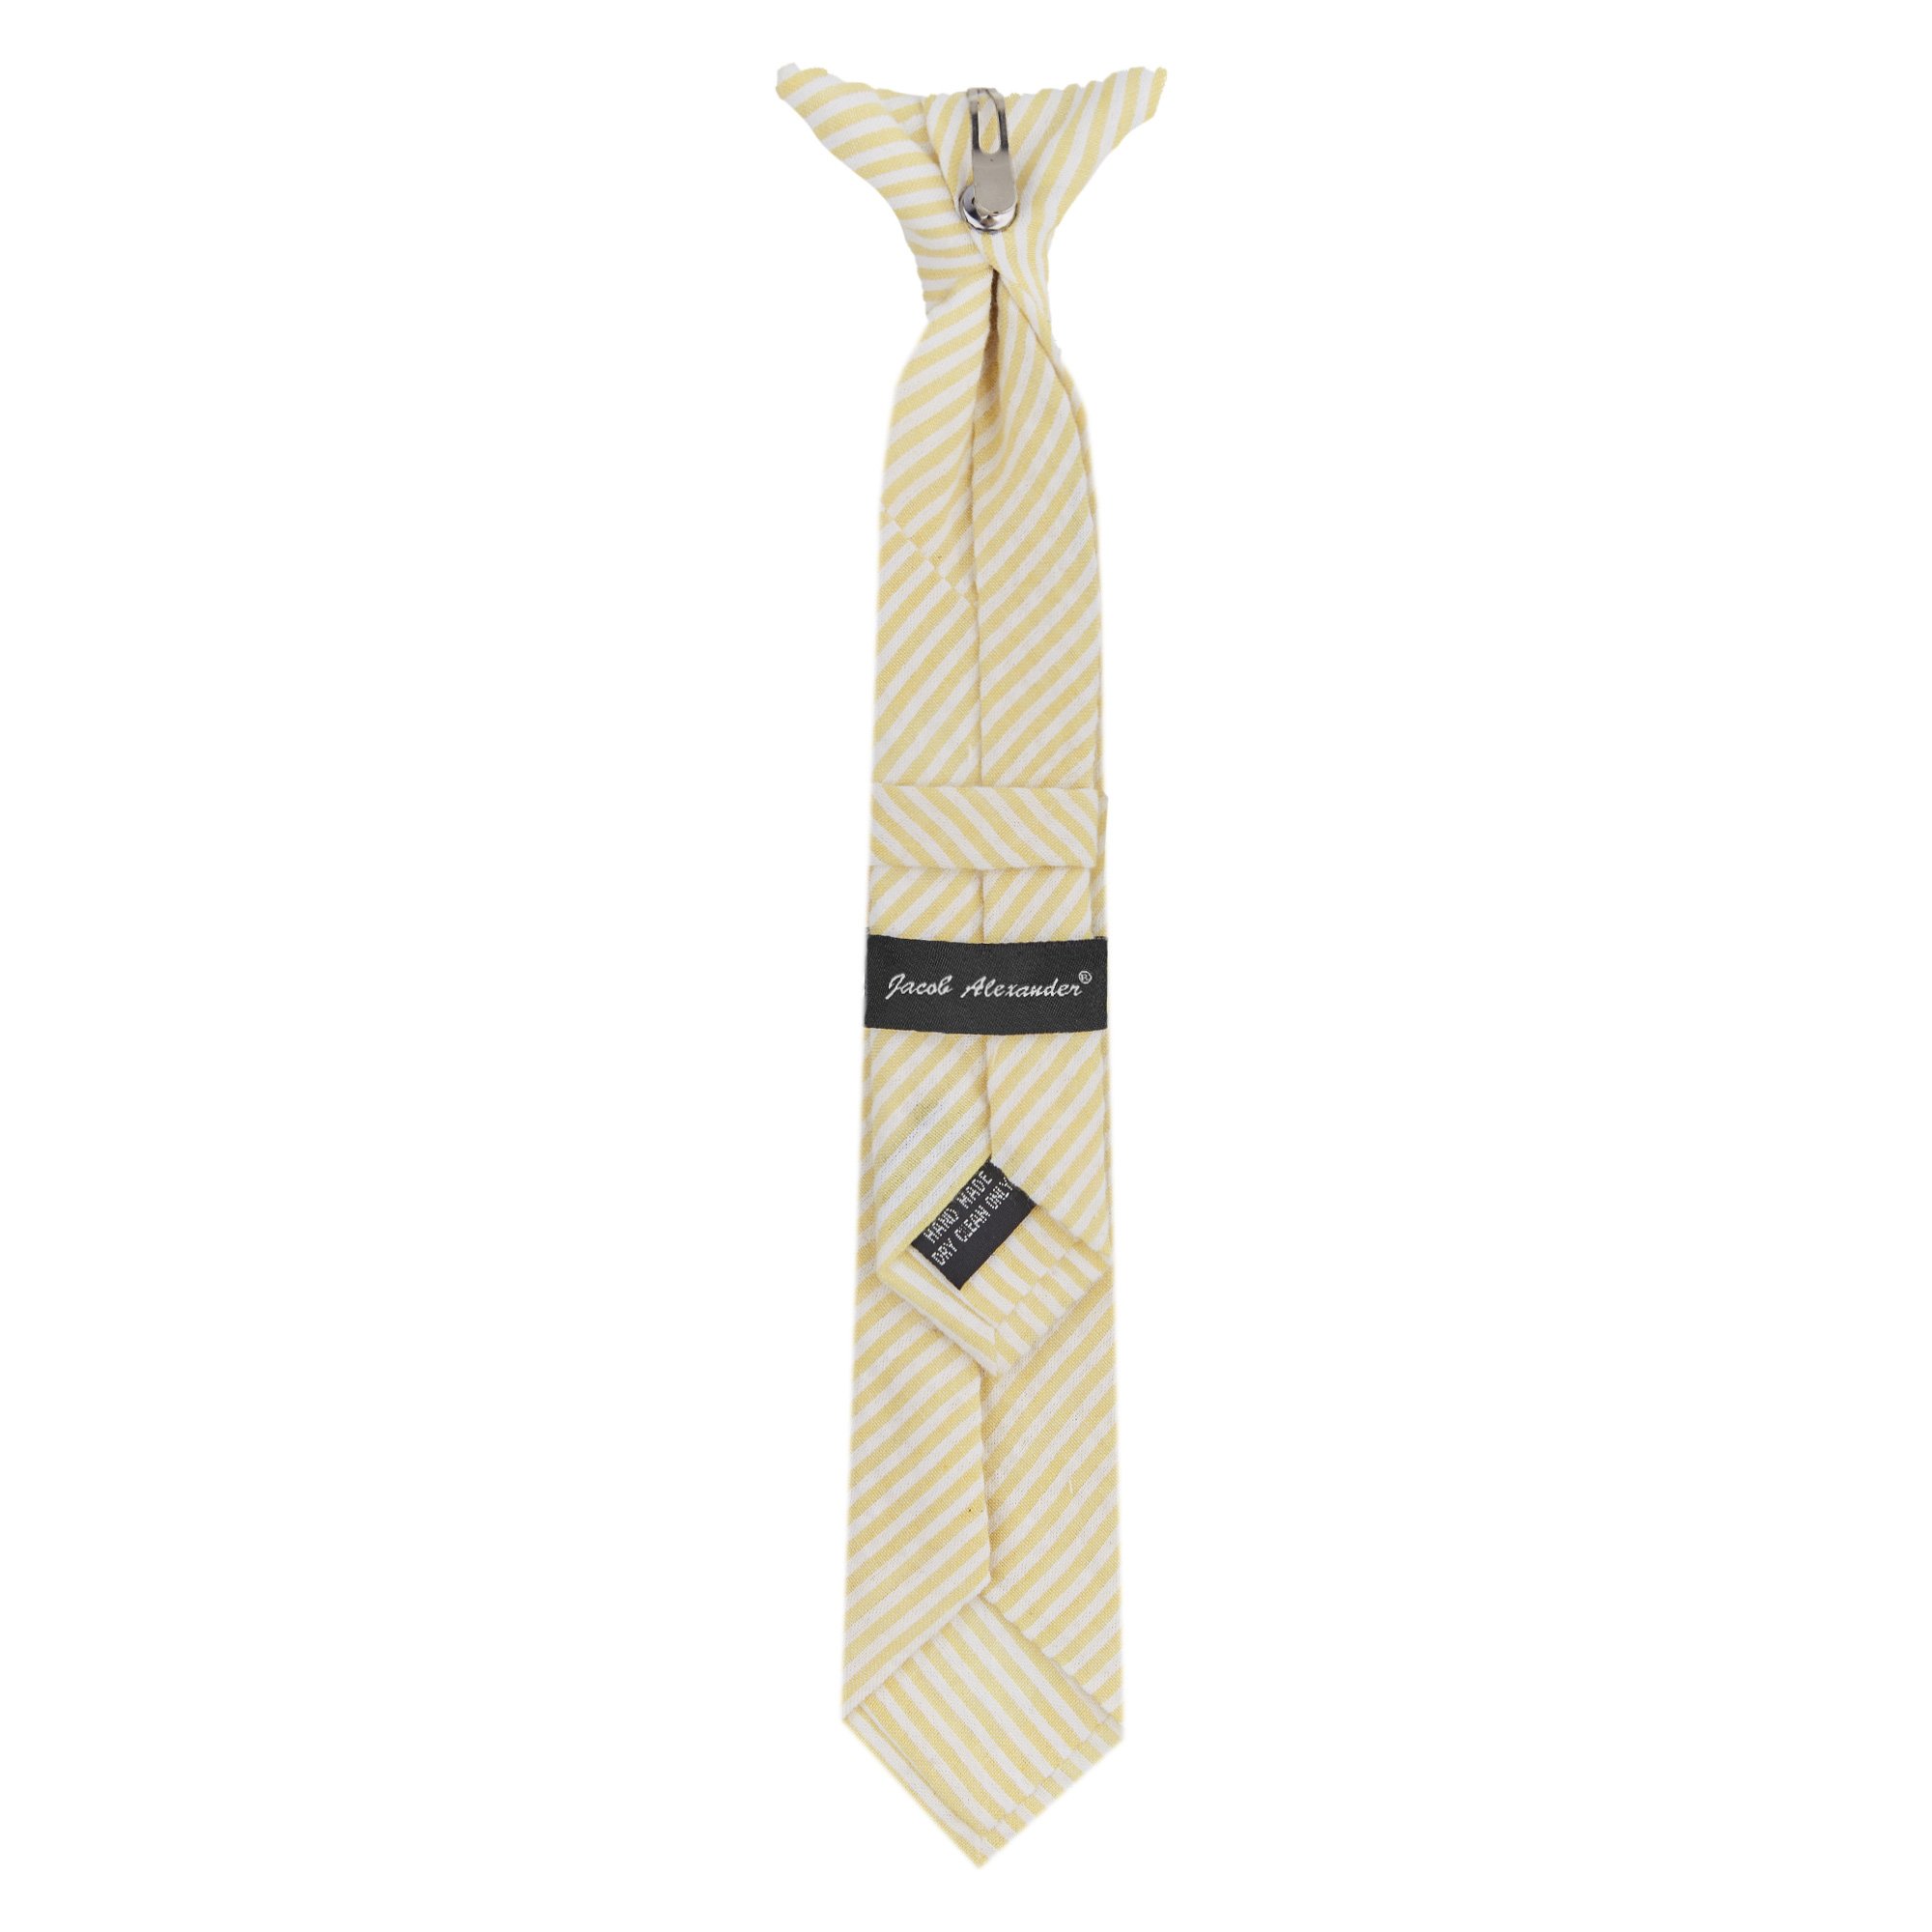 Jacob Alexander Boys 14 inch Clip-On Seersucker Striped Pattern Neck Tie